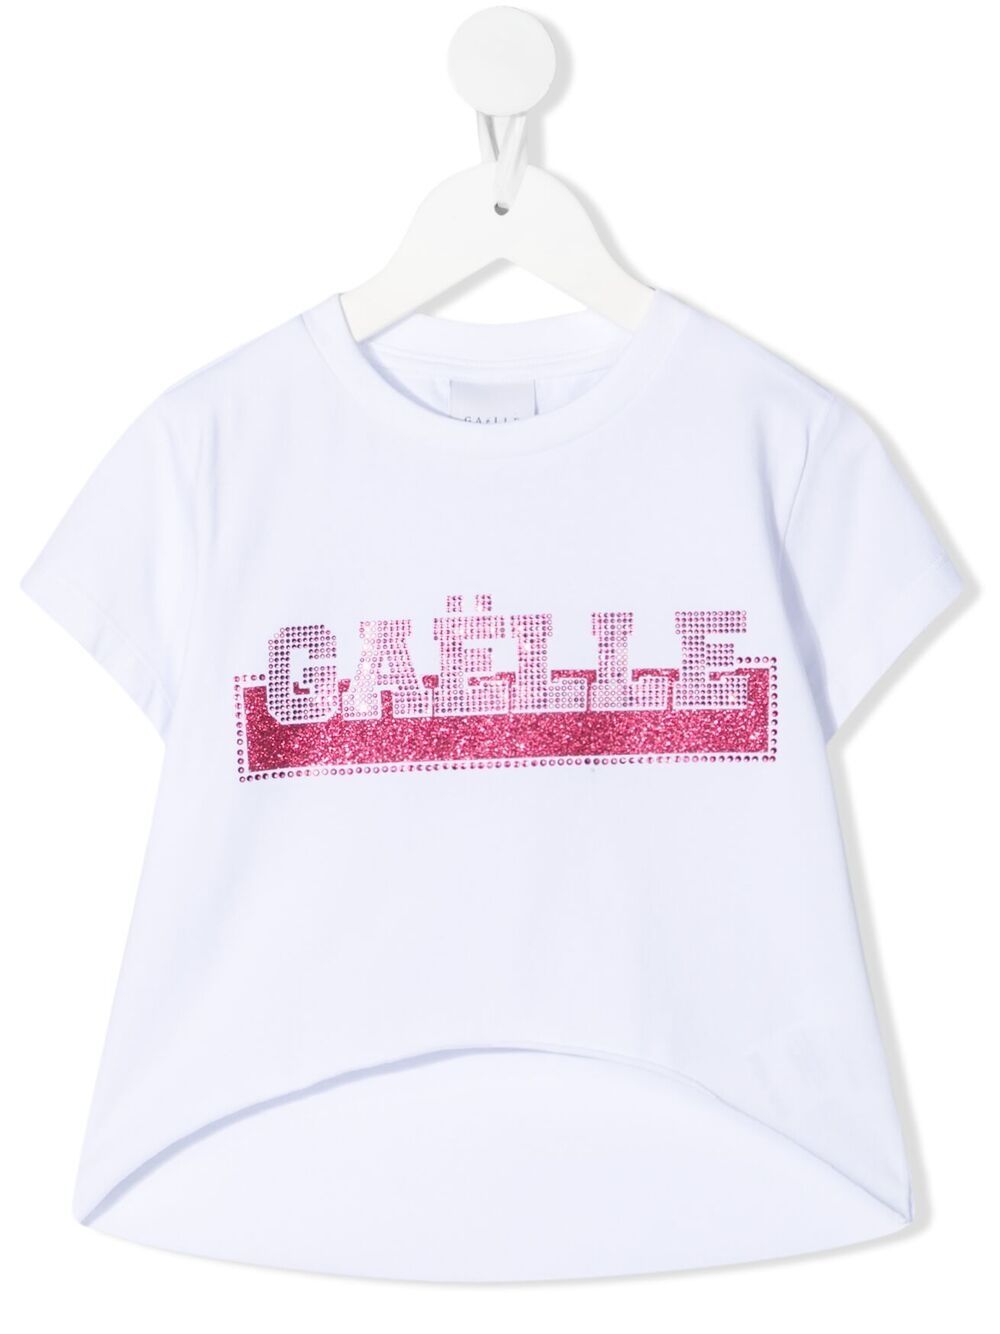 фото Gaelle paris kids футболка с логотипом и заклепками